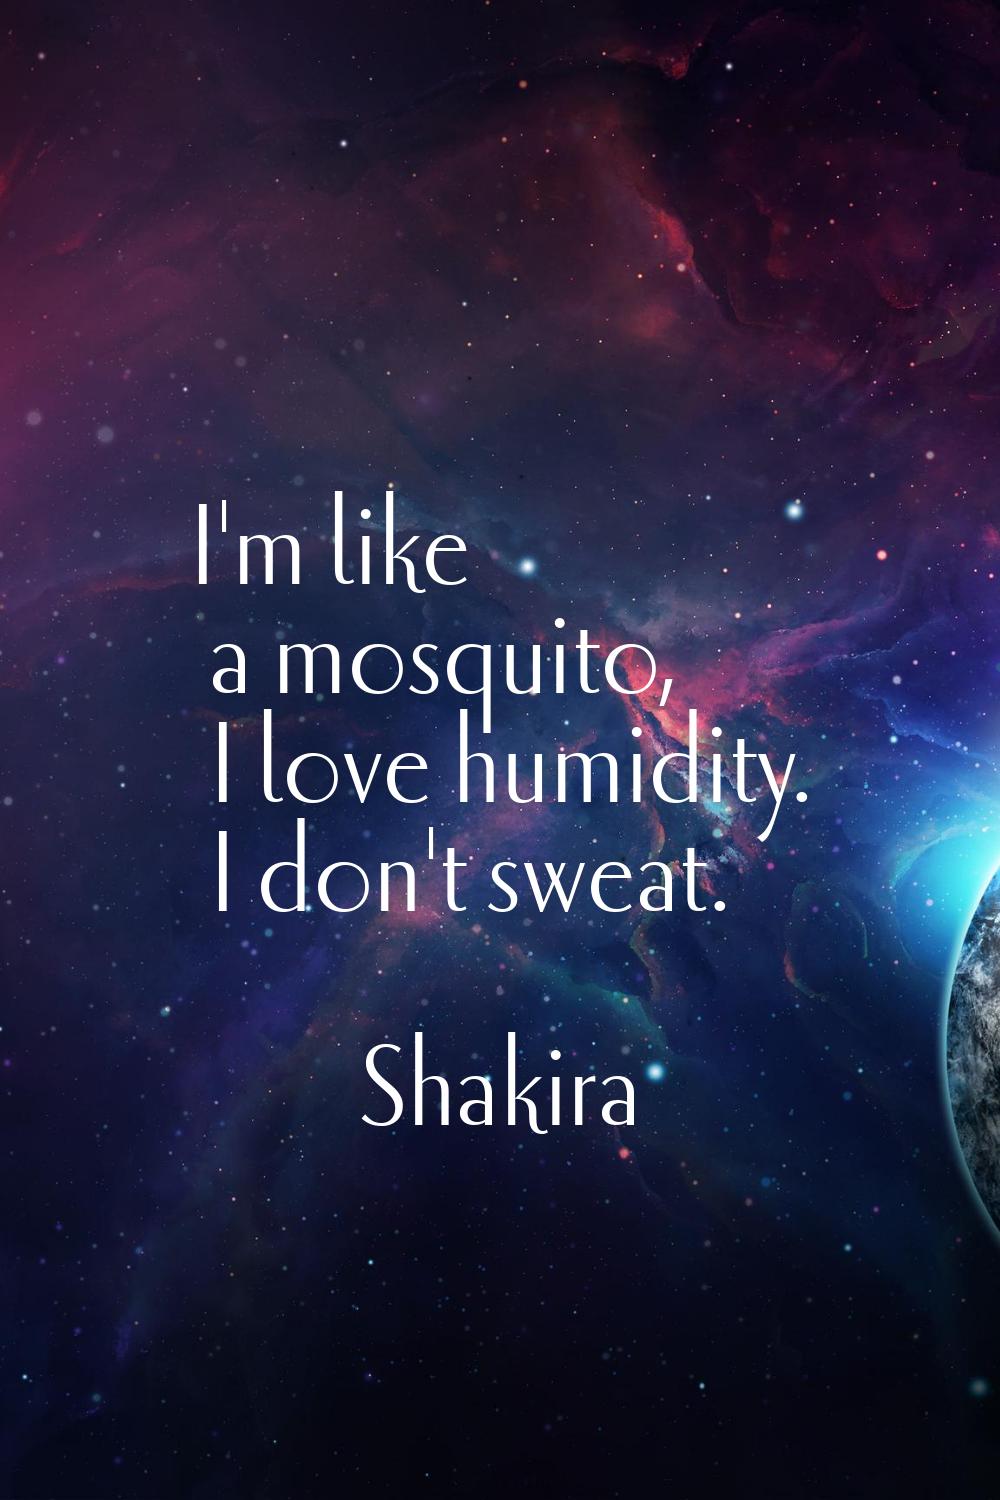 I'm like a mosquito, I love humidity. I don't sweat.